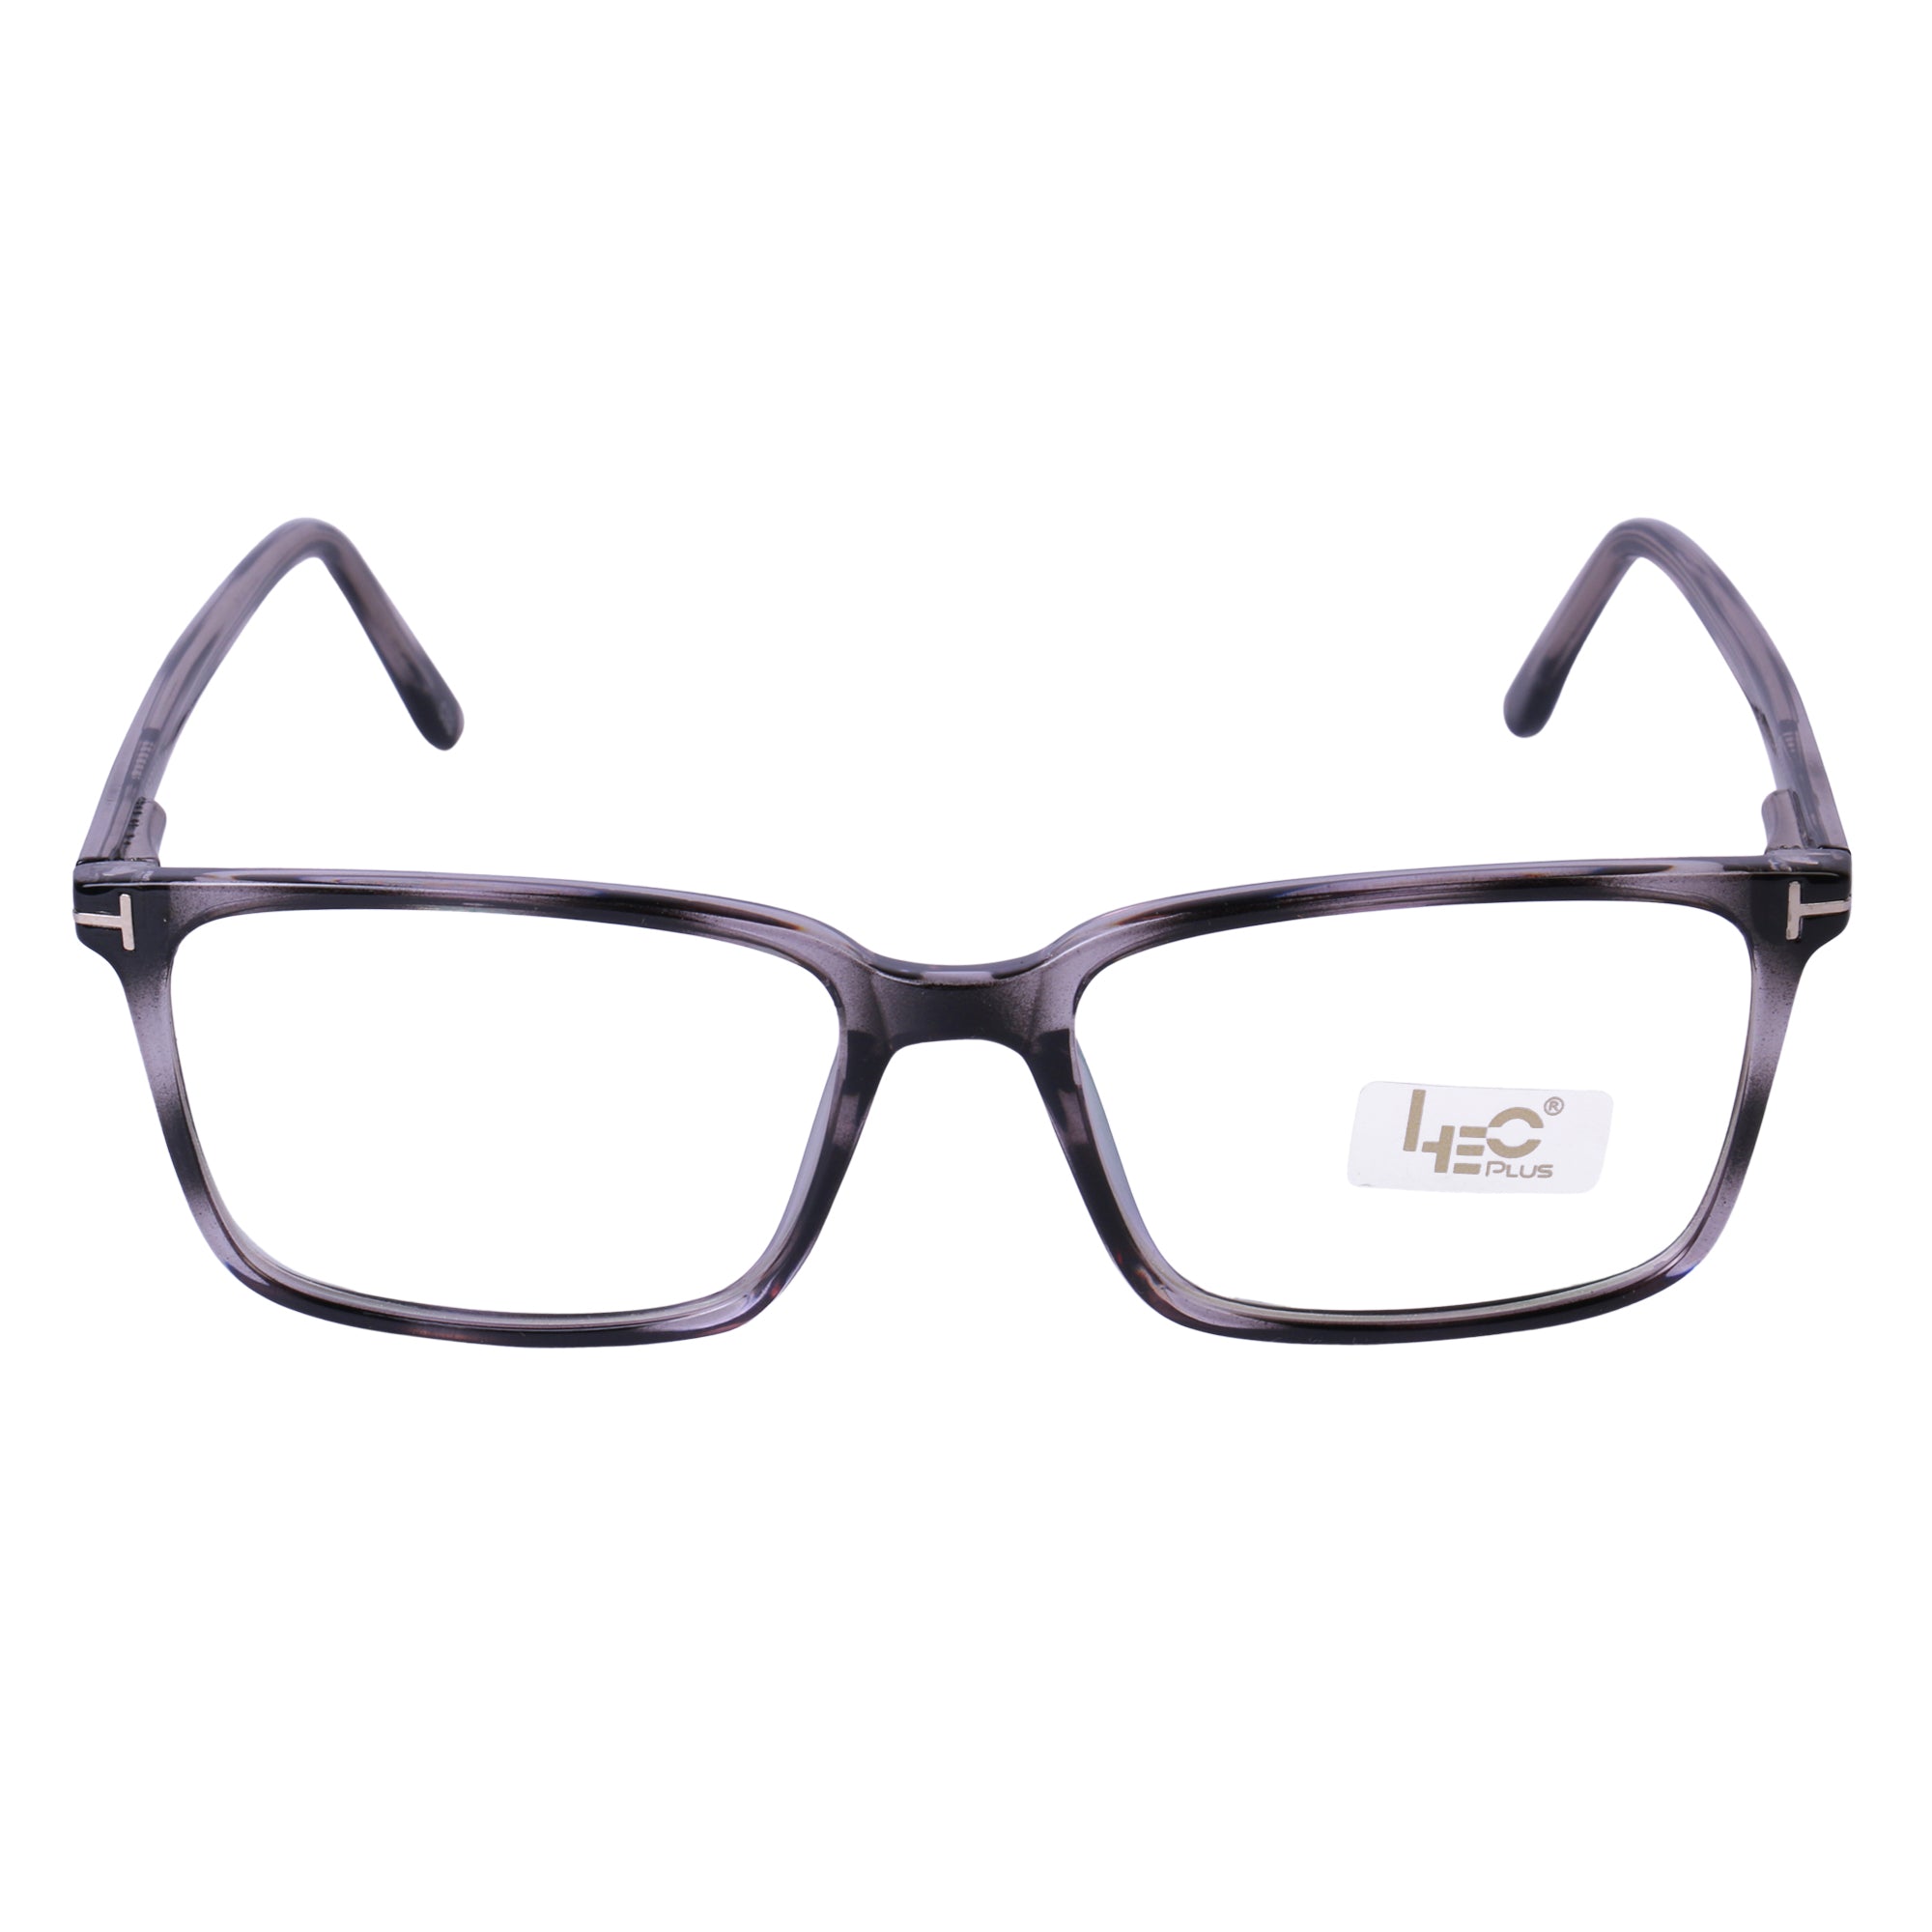 Grey Tortoise Square Eyeglasses - LP80108 C32